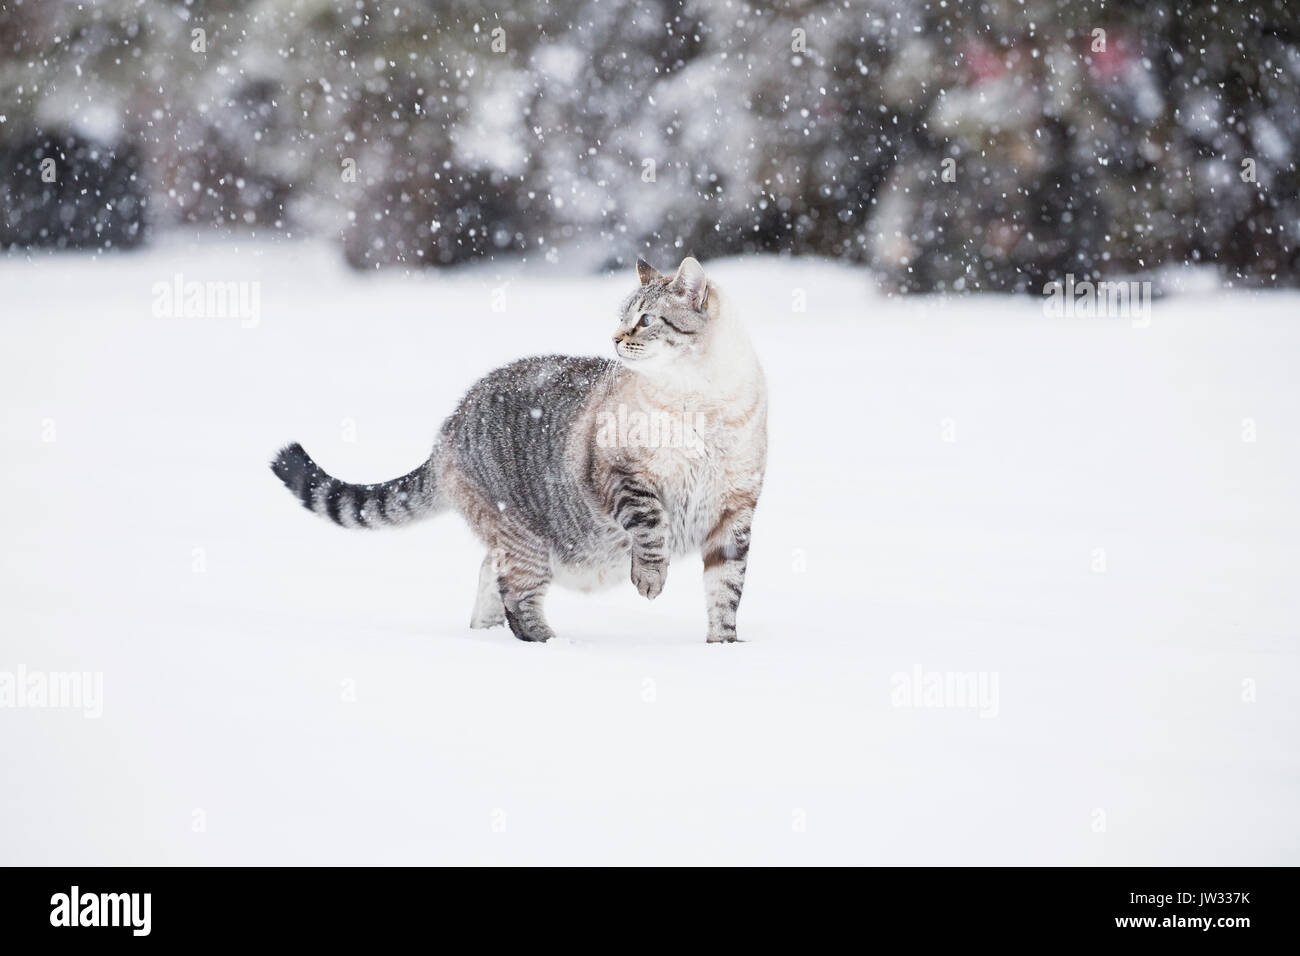 USA, Colorado, Grey cat walking in snow Stock Photo